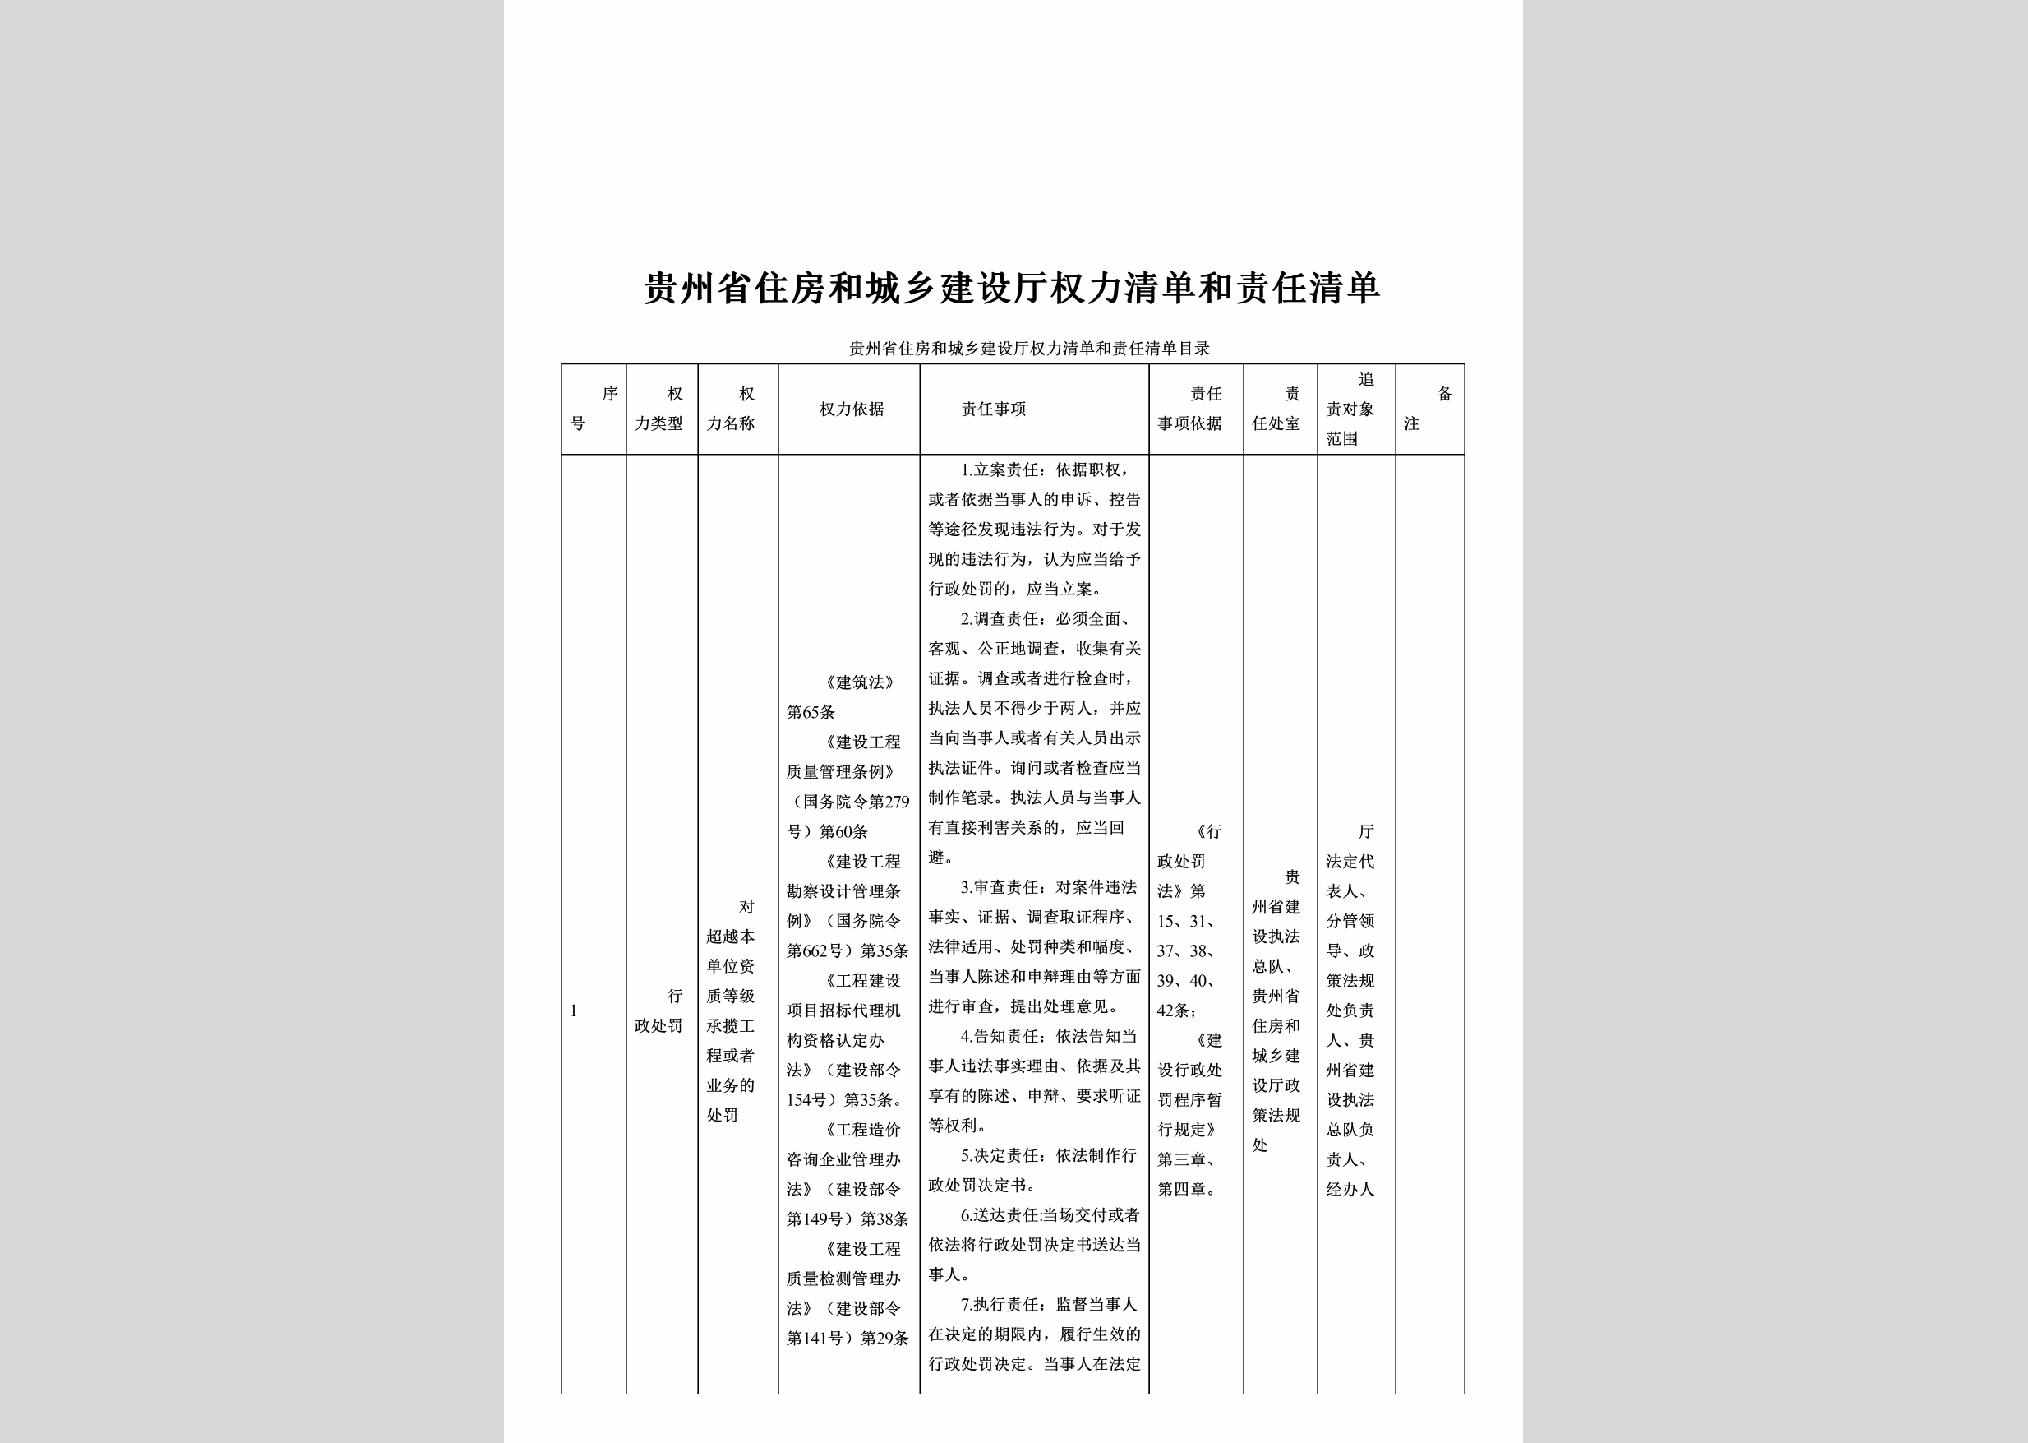 GZ-ZFQLZRQD-2017：贵州省住房和城乡建设厅权力清单和责任清单